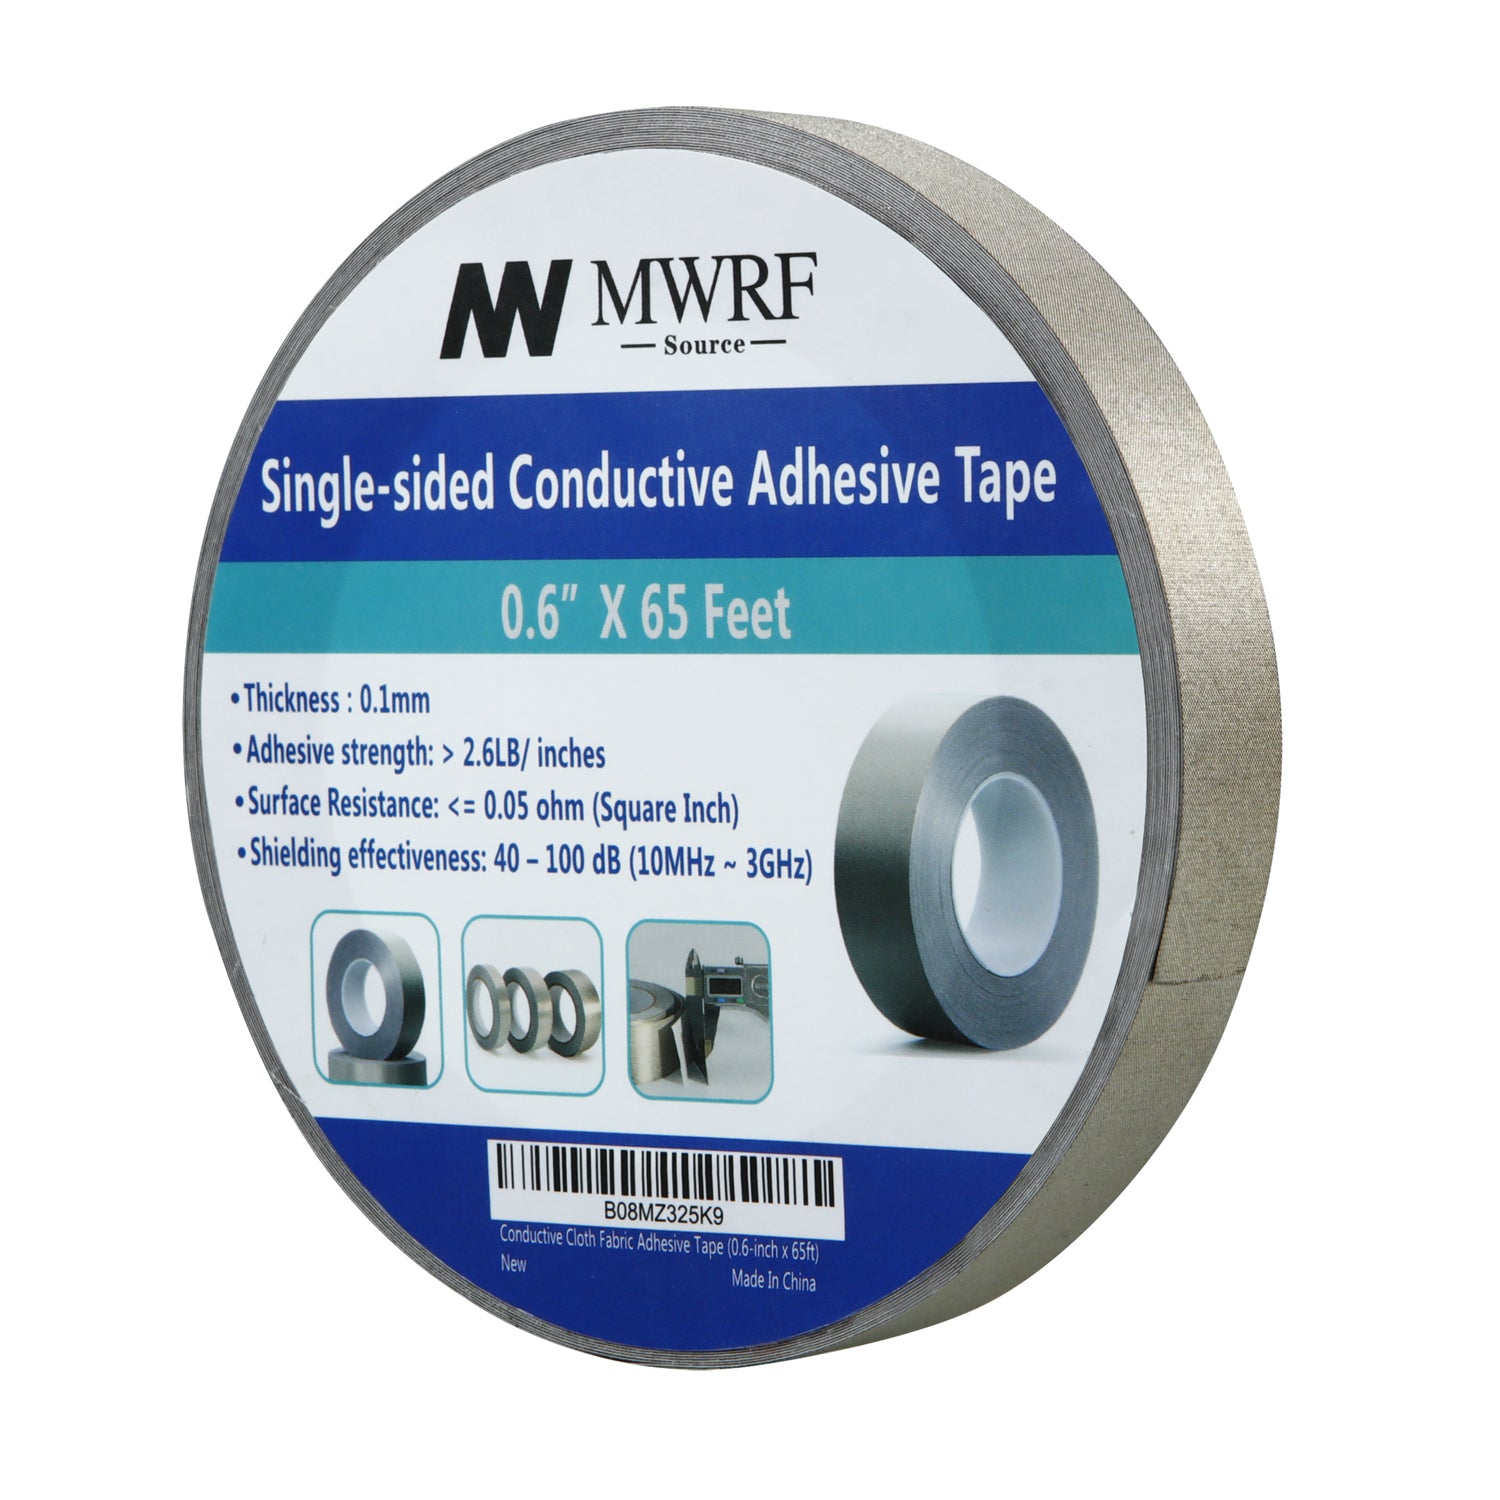 TitanRF Faraday Tape - High-Shielding Conductive Adhesive Tape,1W